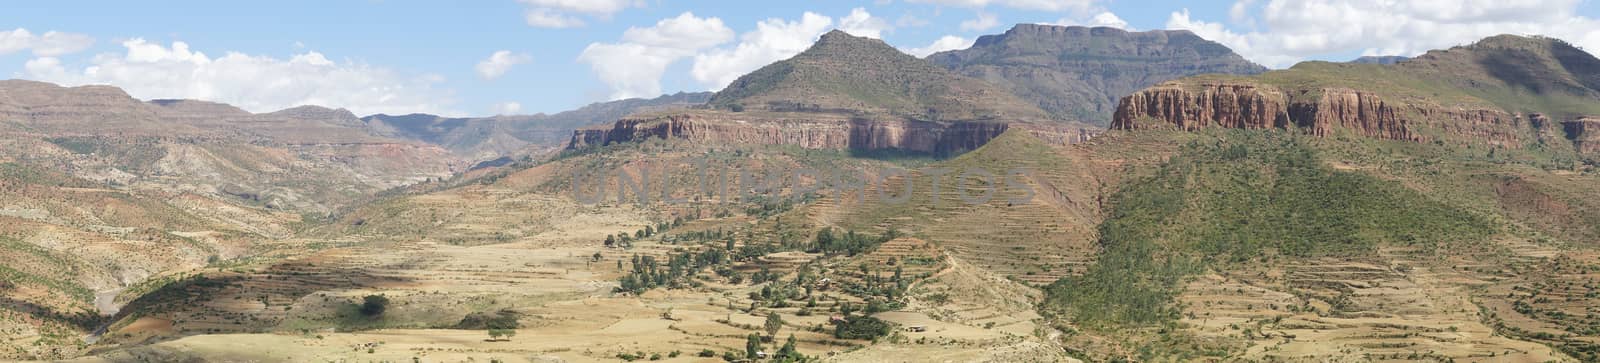 Landscape in Tigray province, Ethiopia, Africa